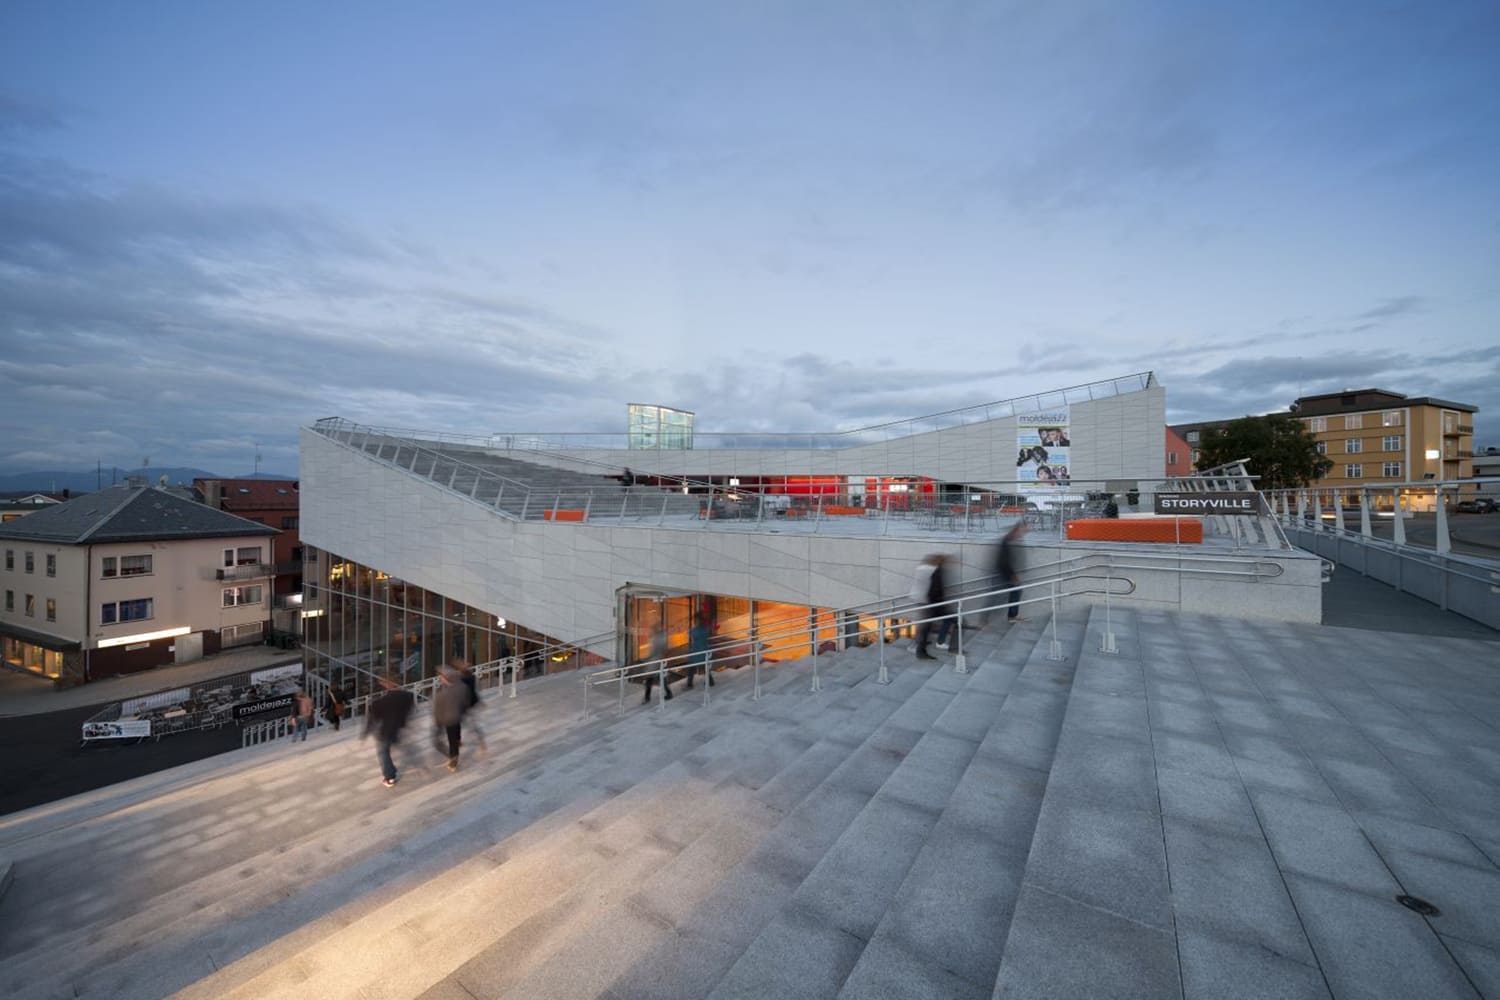 Plassen Cultural Center in Molde